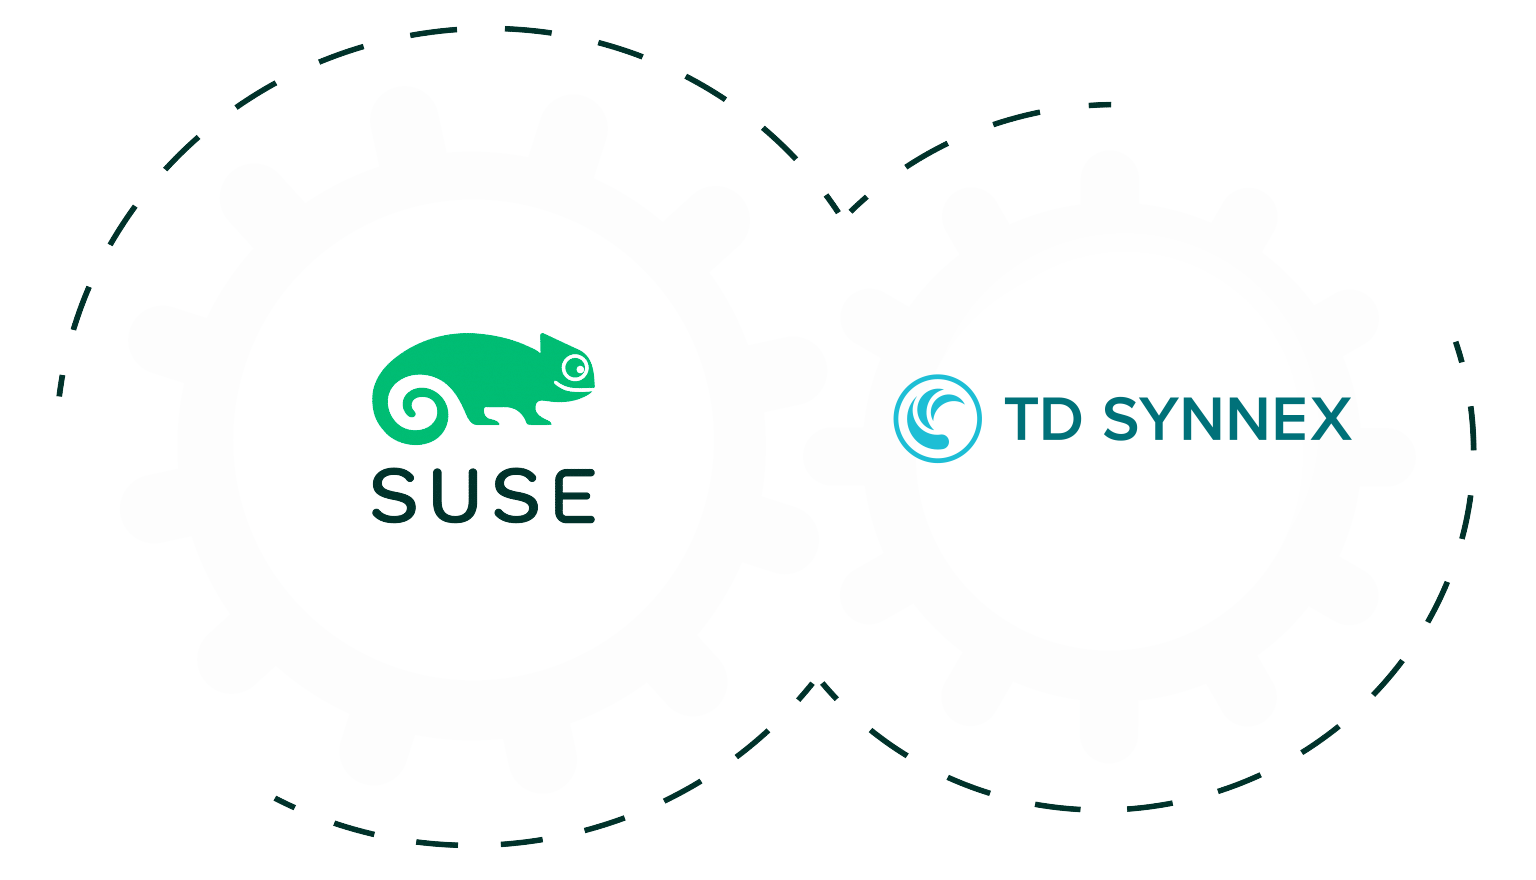 Suse - TD SYNNEX partnership